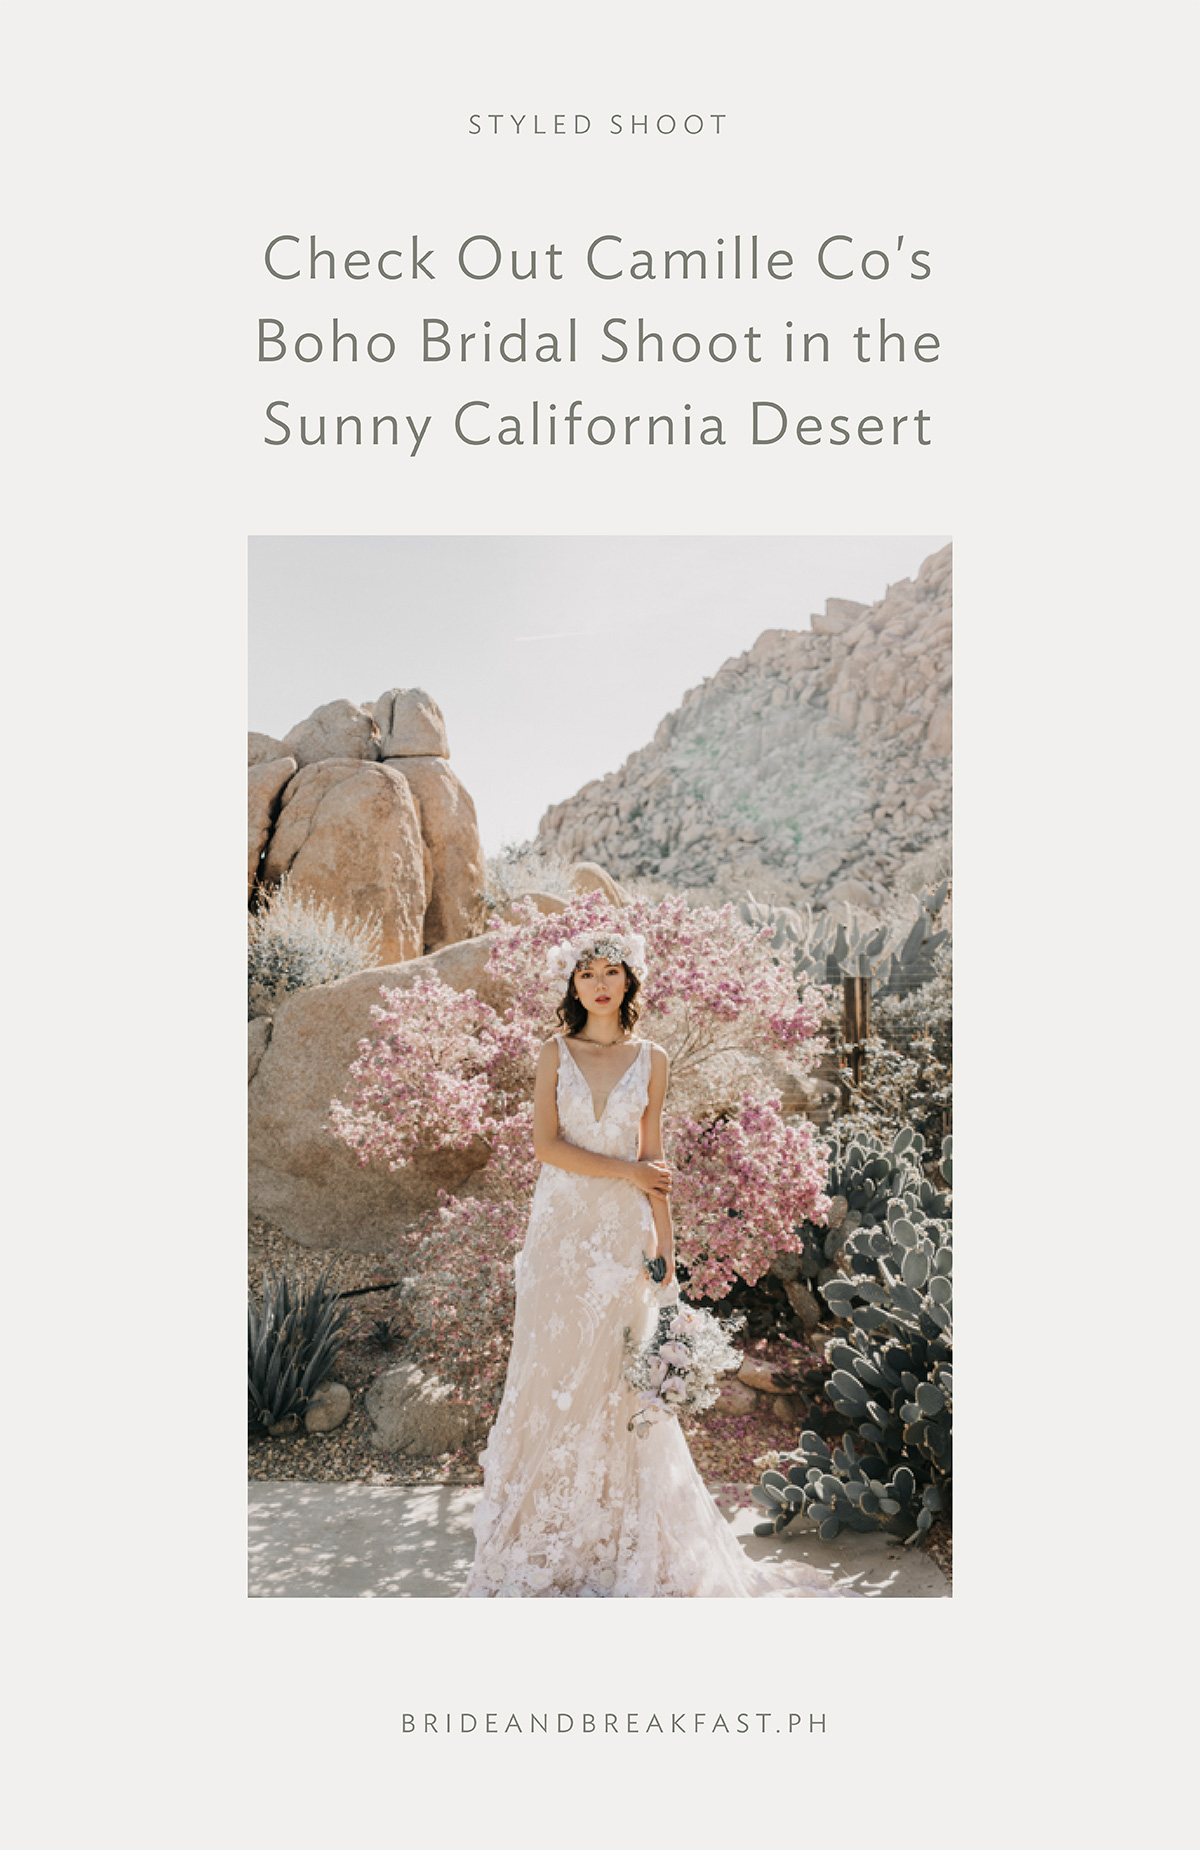 Checkout Camille Co's Boho Bridal Shoot in the Sunny California Desert